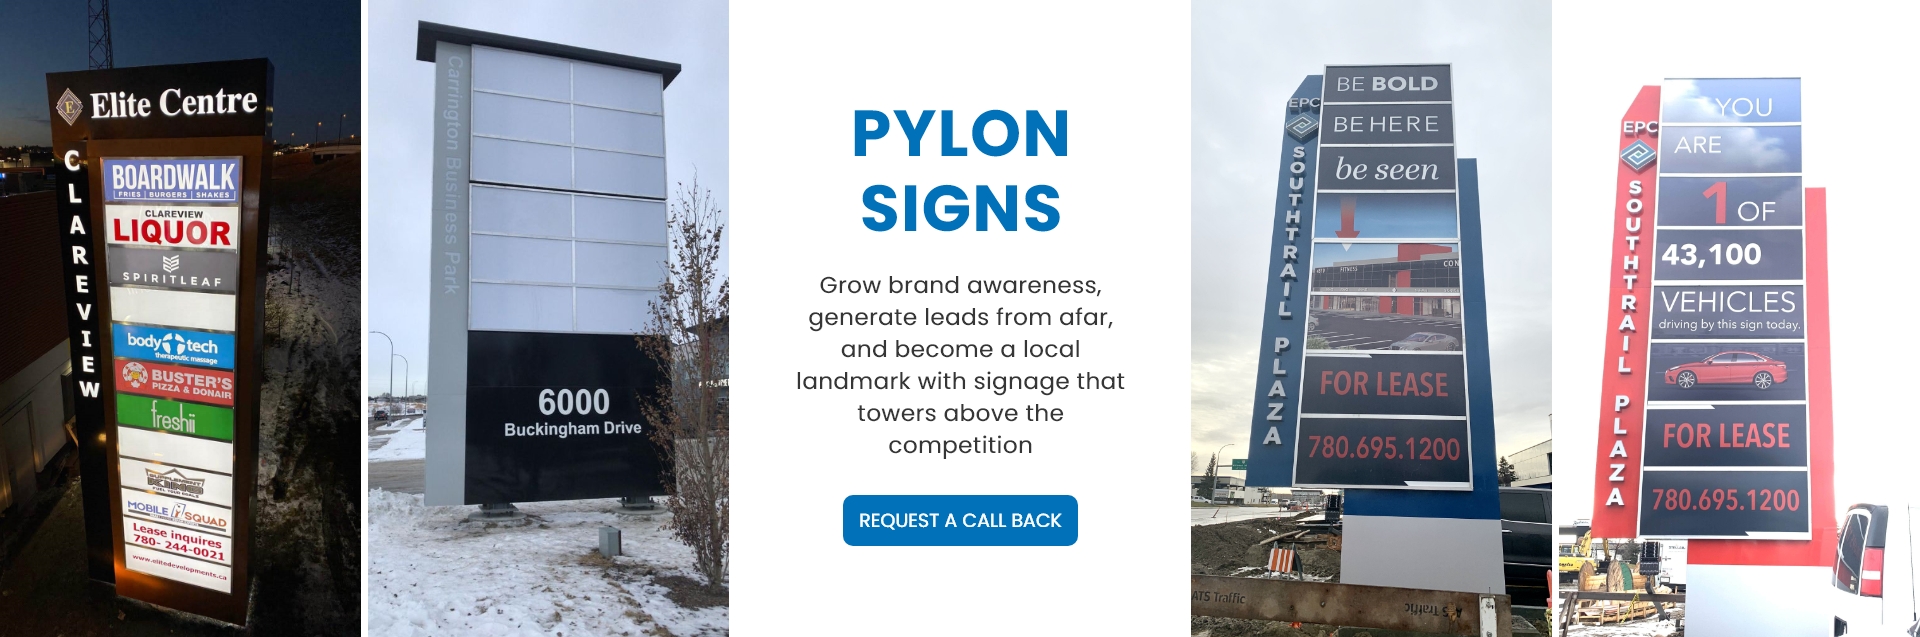 Pylon Business Signage by Edmonton Sign Company, AB